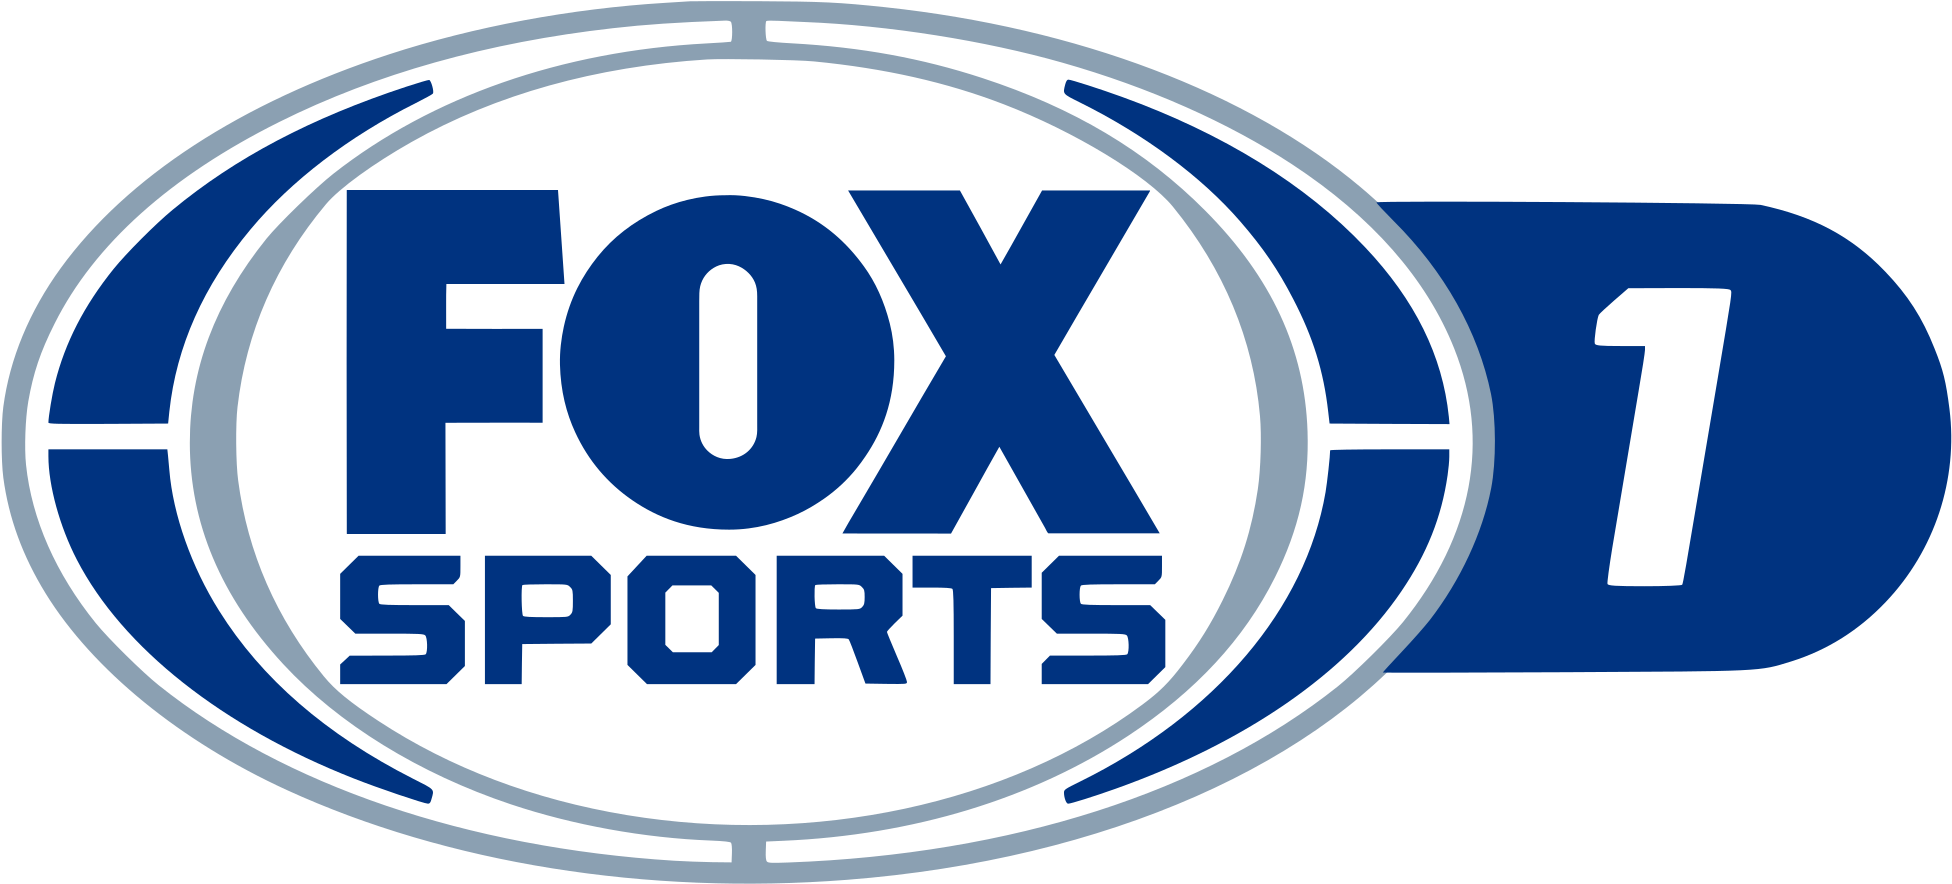 Телеканал Fox. 3 Sport Телеканал. Логотип телеканала Фокс. Sport3.TV. Фокс спорт